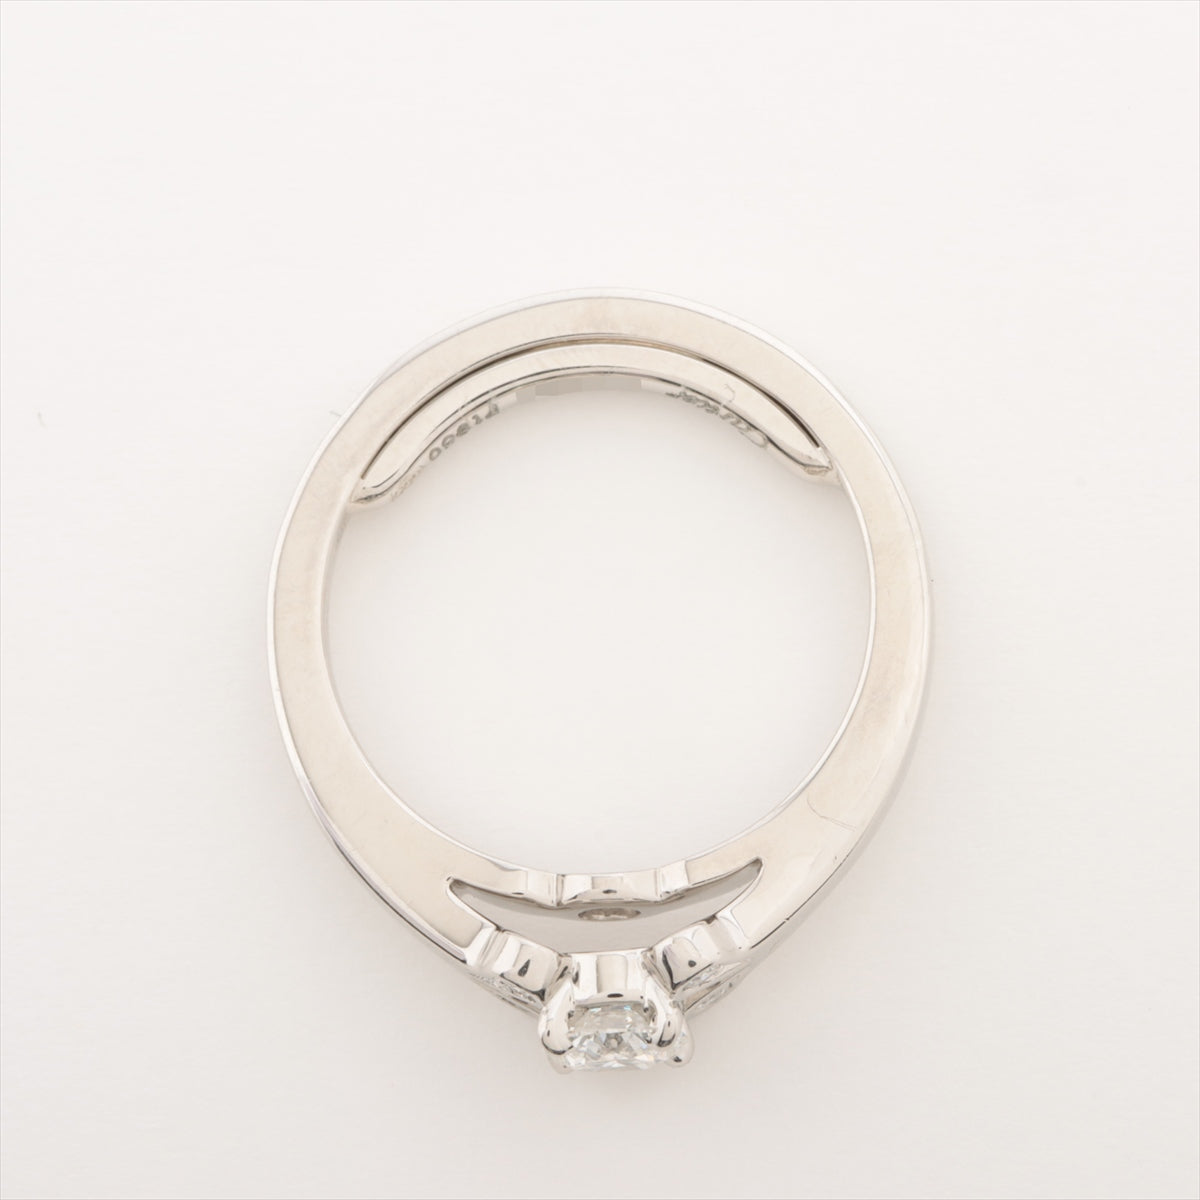 Cartier Valerie Diamond Ring Pt950 5.3g 0.27 F VVS2 3EX NONE